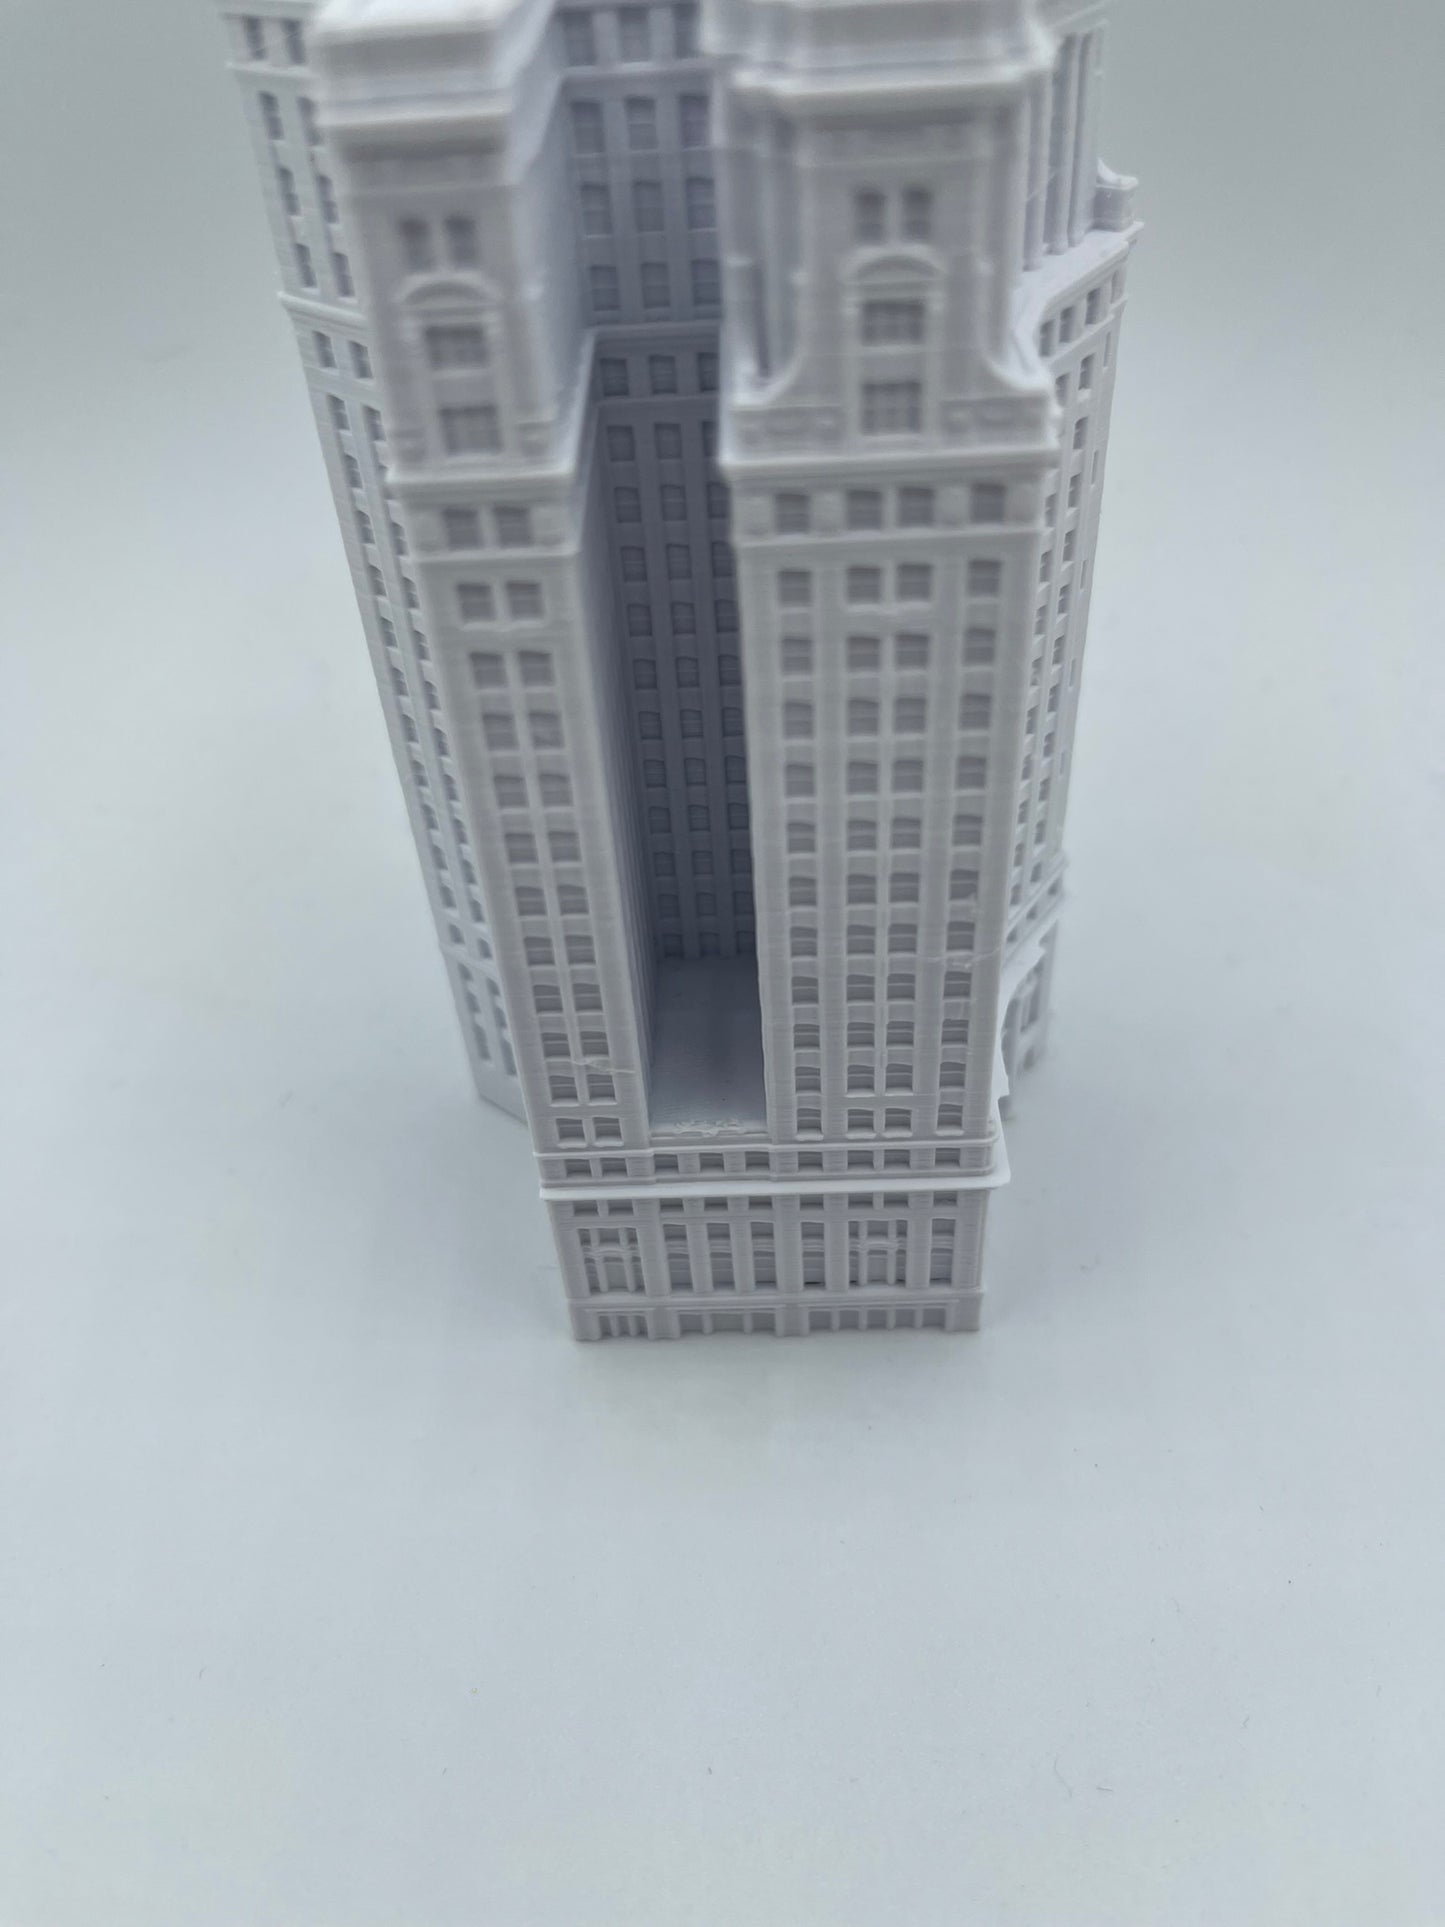 London Guarantee Building Model- 3D Printed